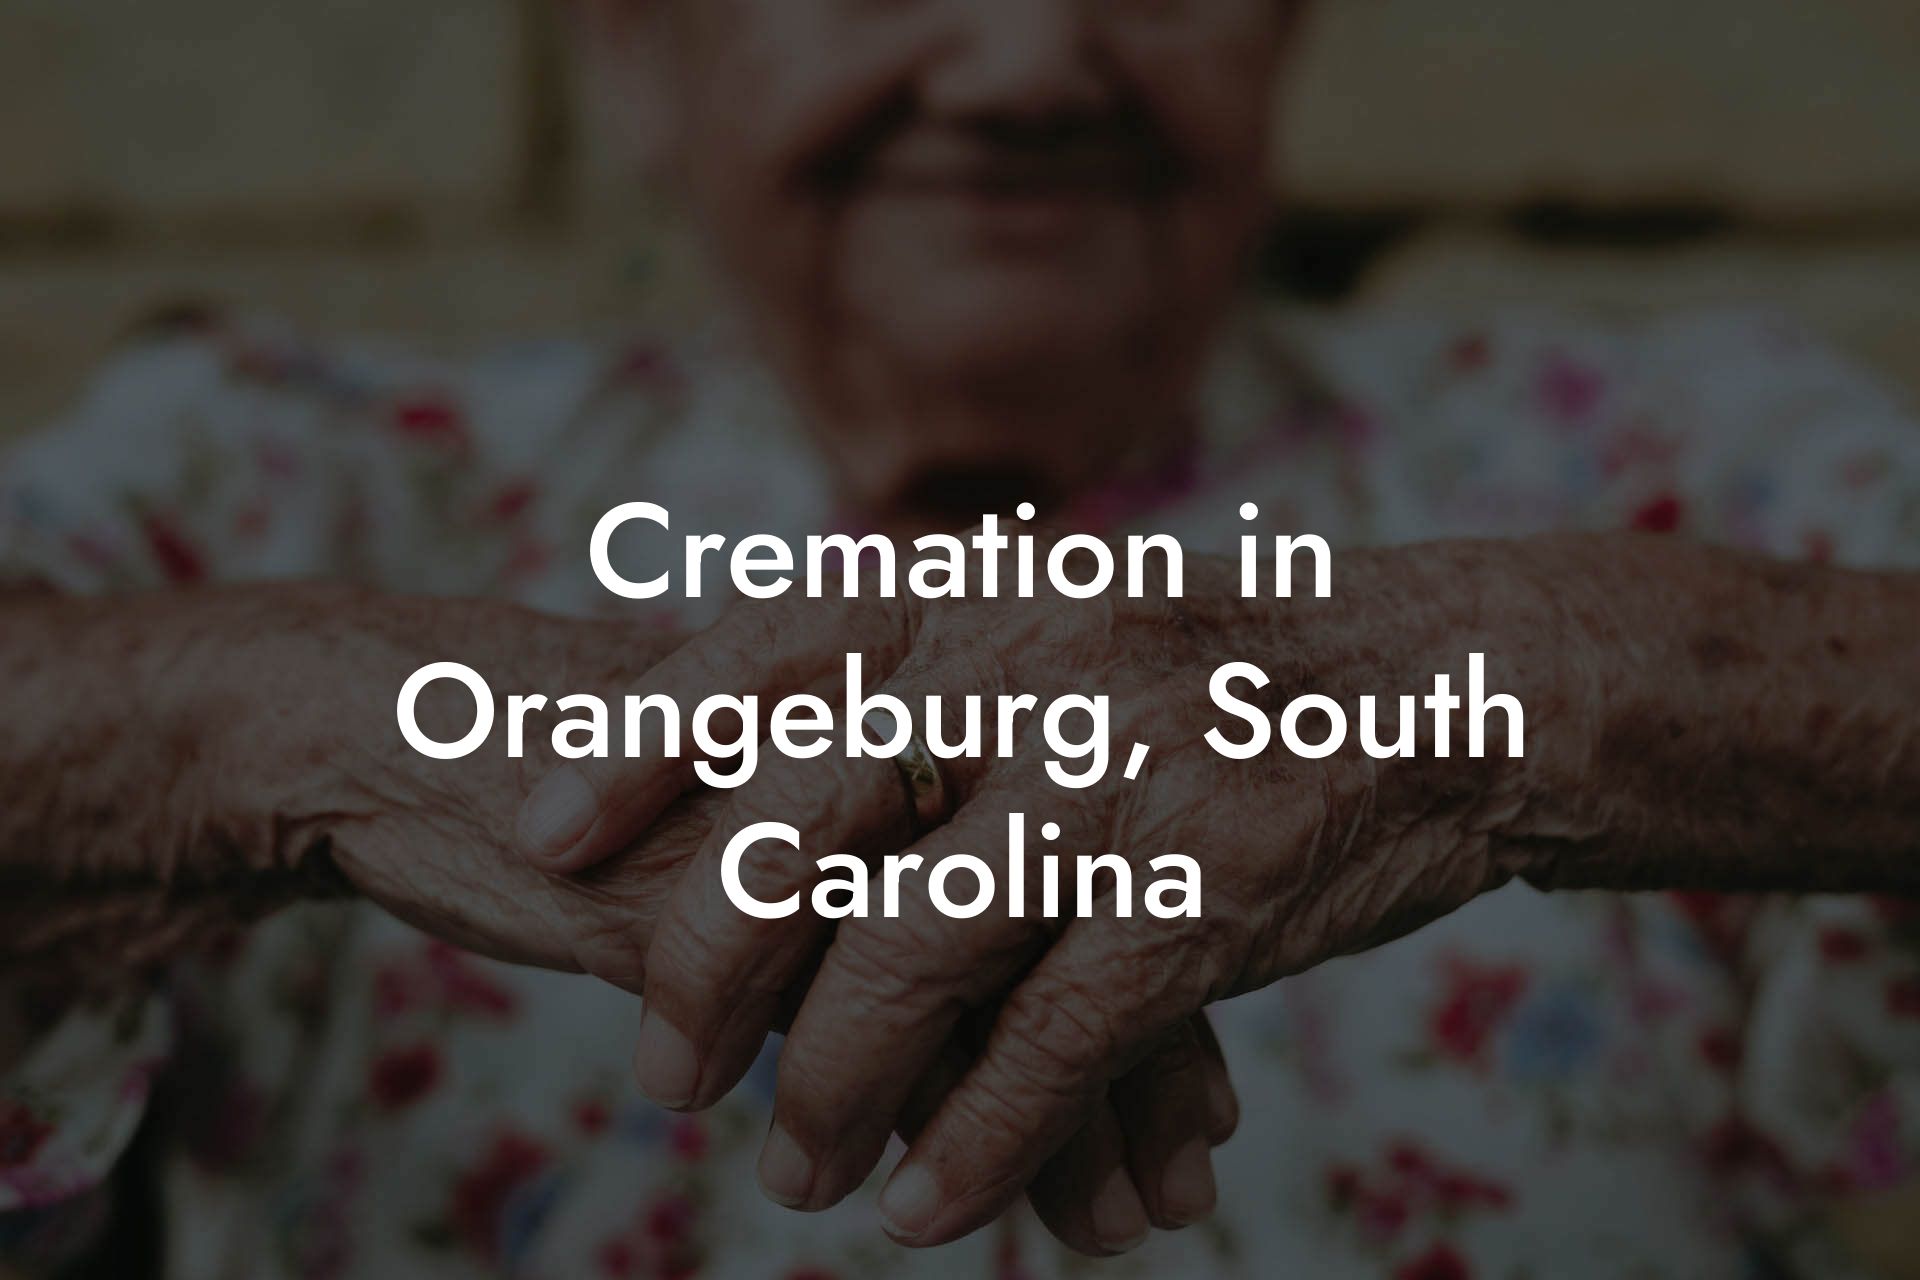 Cremation in Orangeburg, South Carolina